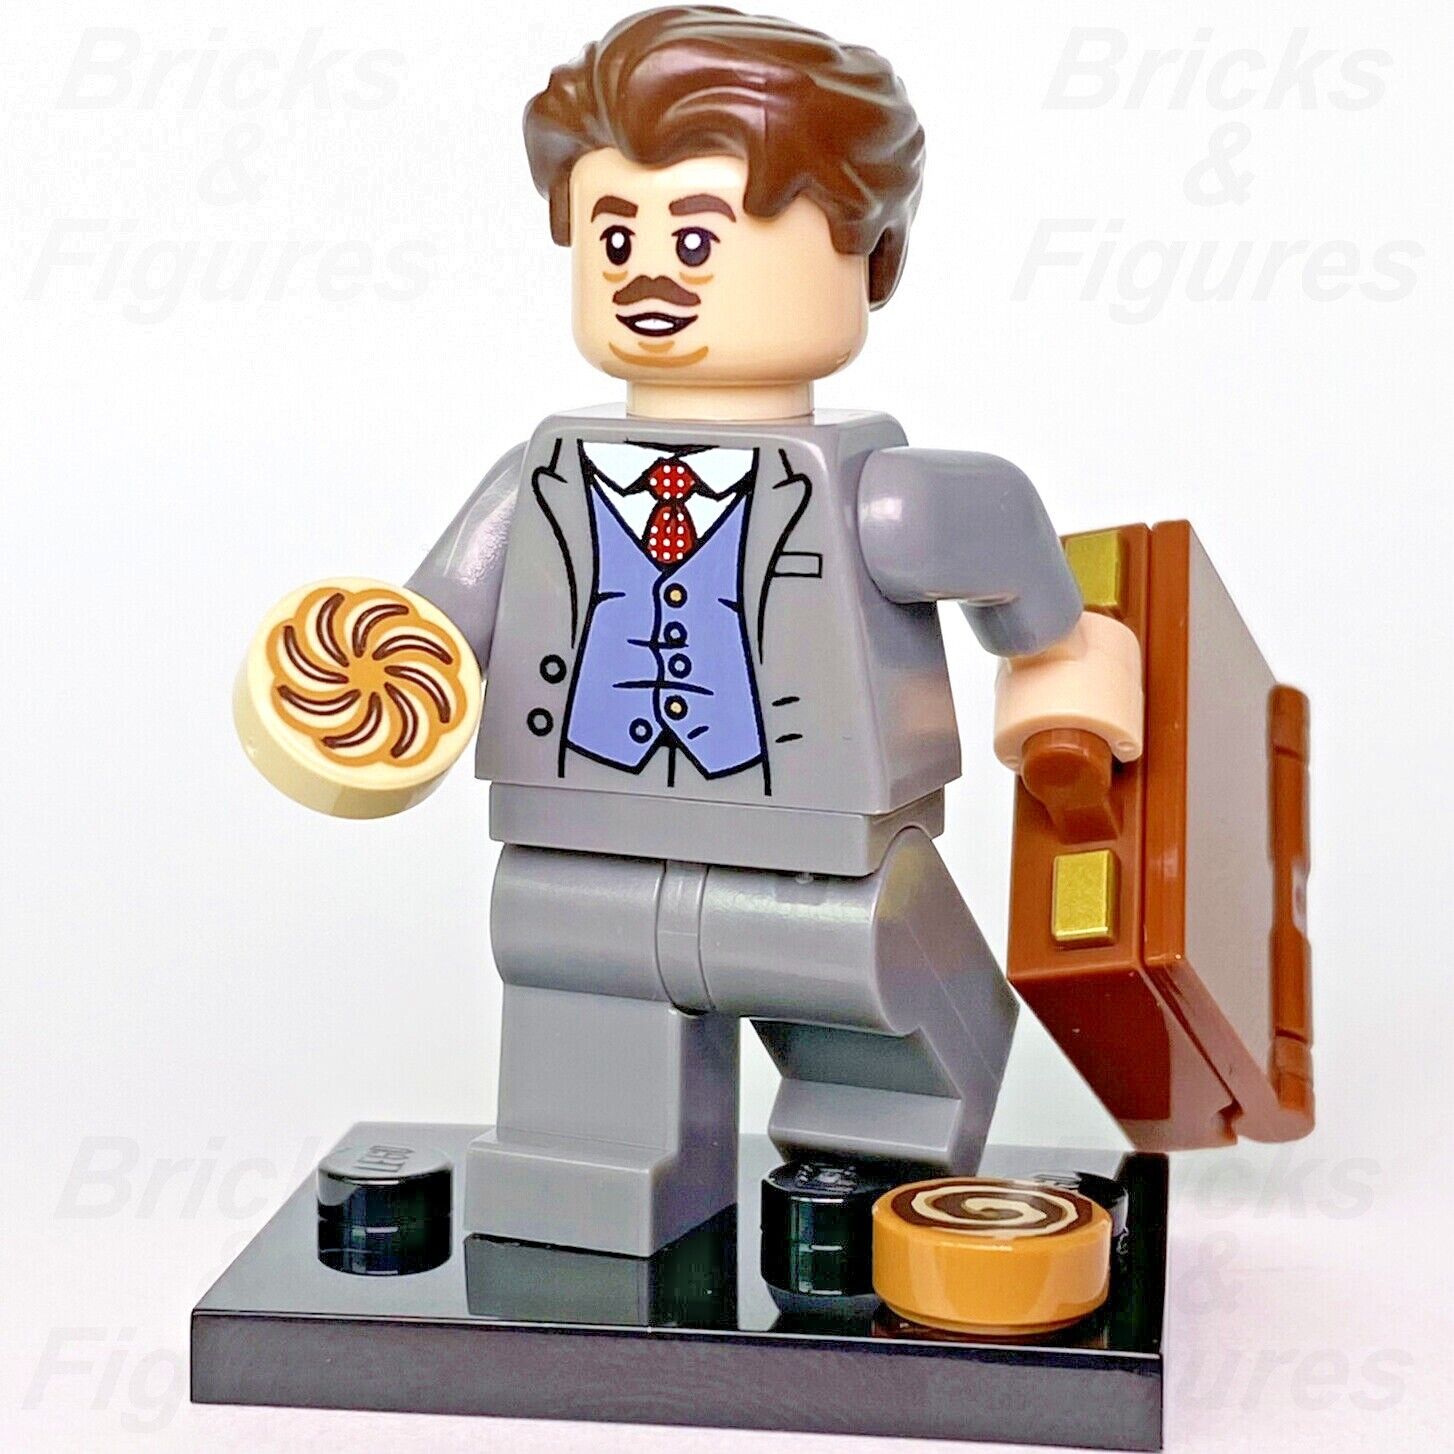 Harry Potter LEGO Jacob Kowalski Collectible Minifigures Series 1 71022 New - Bricks & Figures